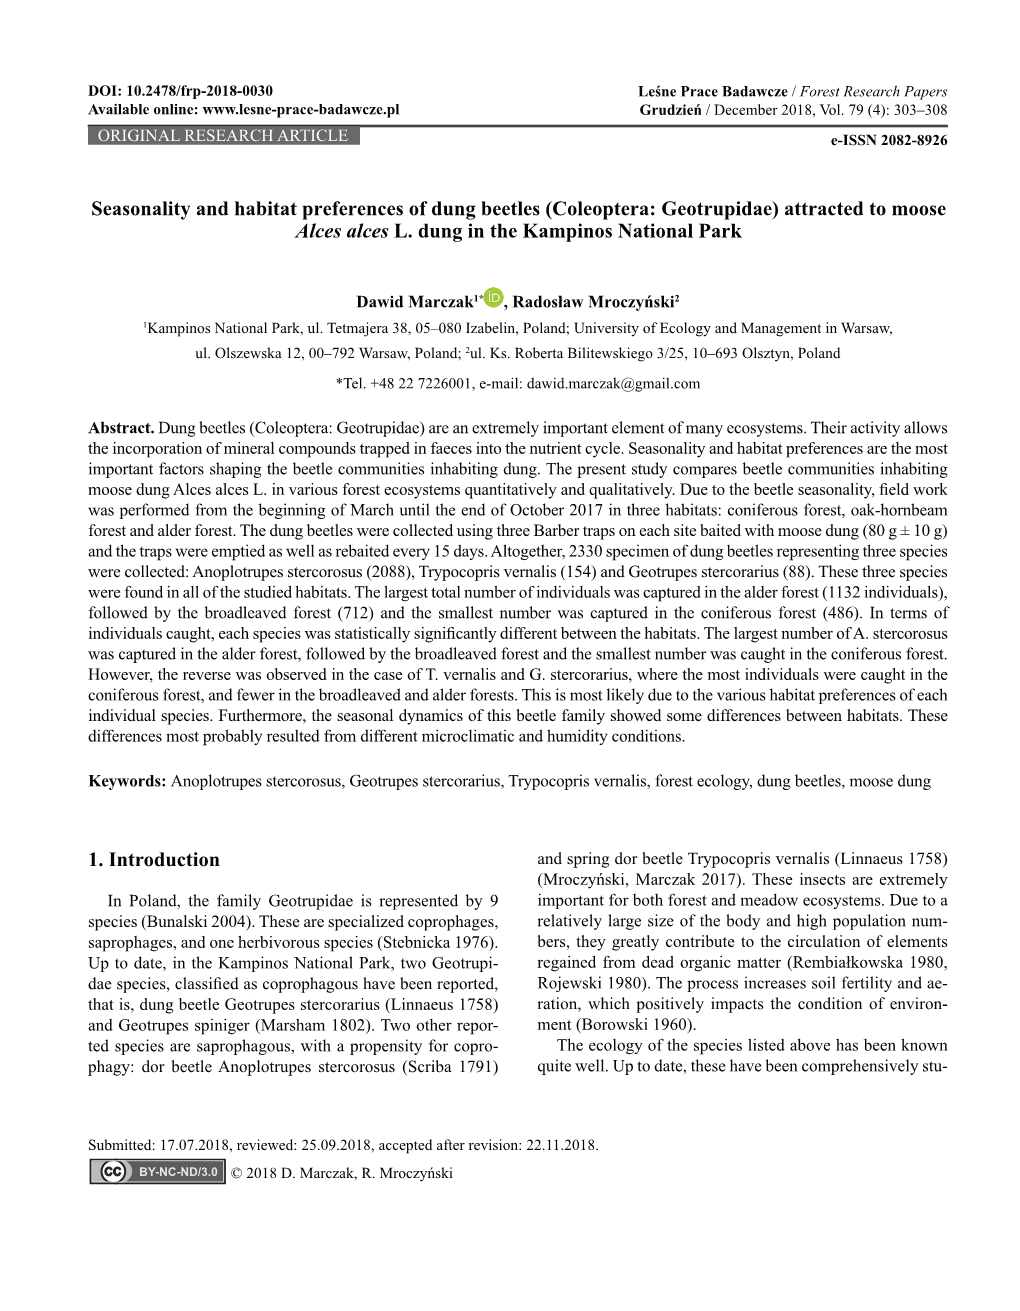 Seasonality and Habitat Preferences of Dung Beetles